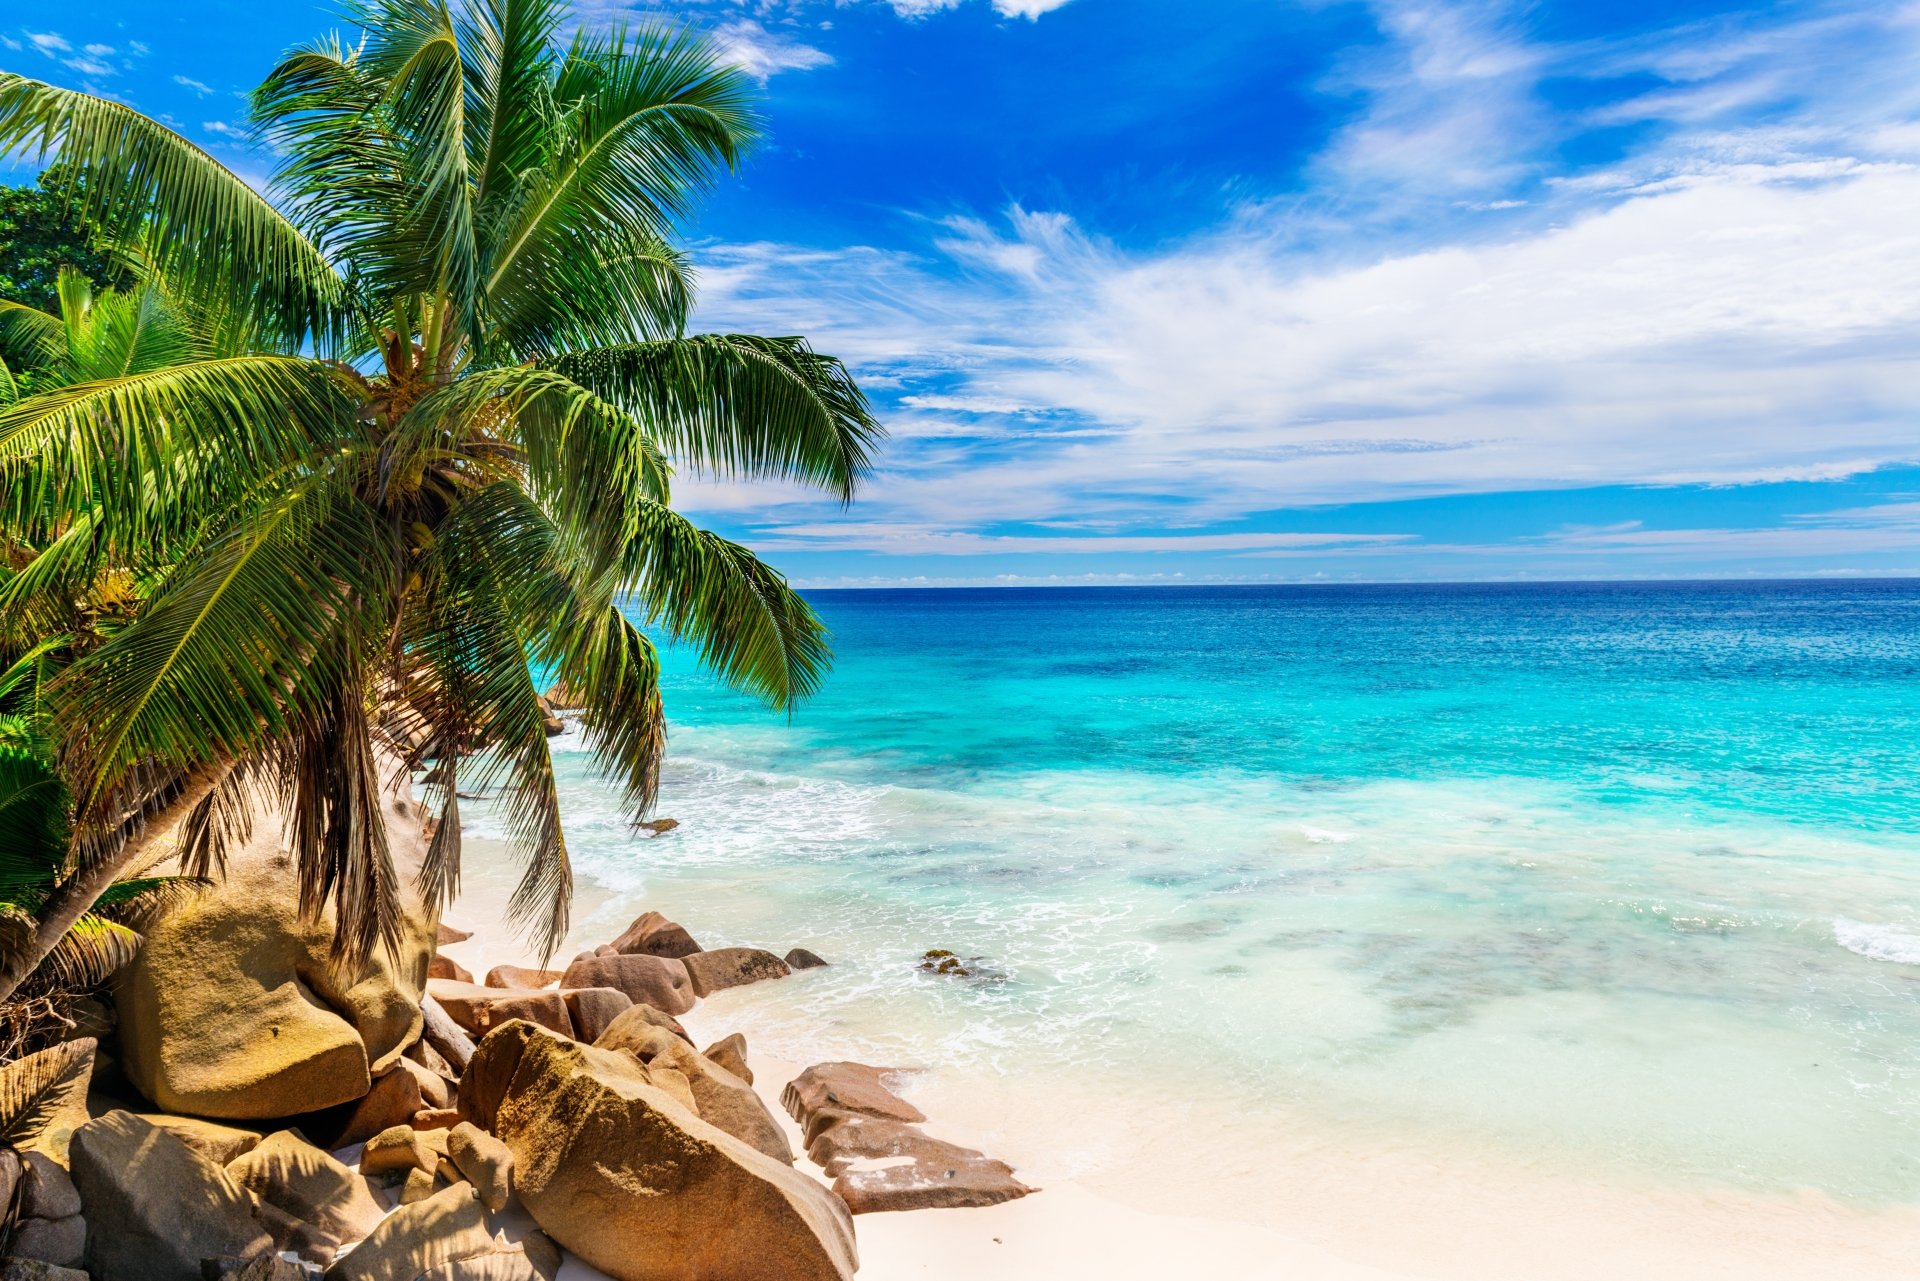 Download Horizon Palm Tree Blue Turquoise Ocean Seychelles Tropical Nature Beach  4k Ultra HD Wallpaper